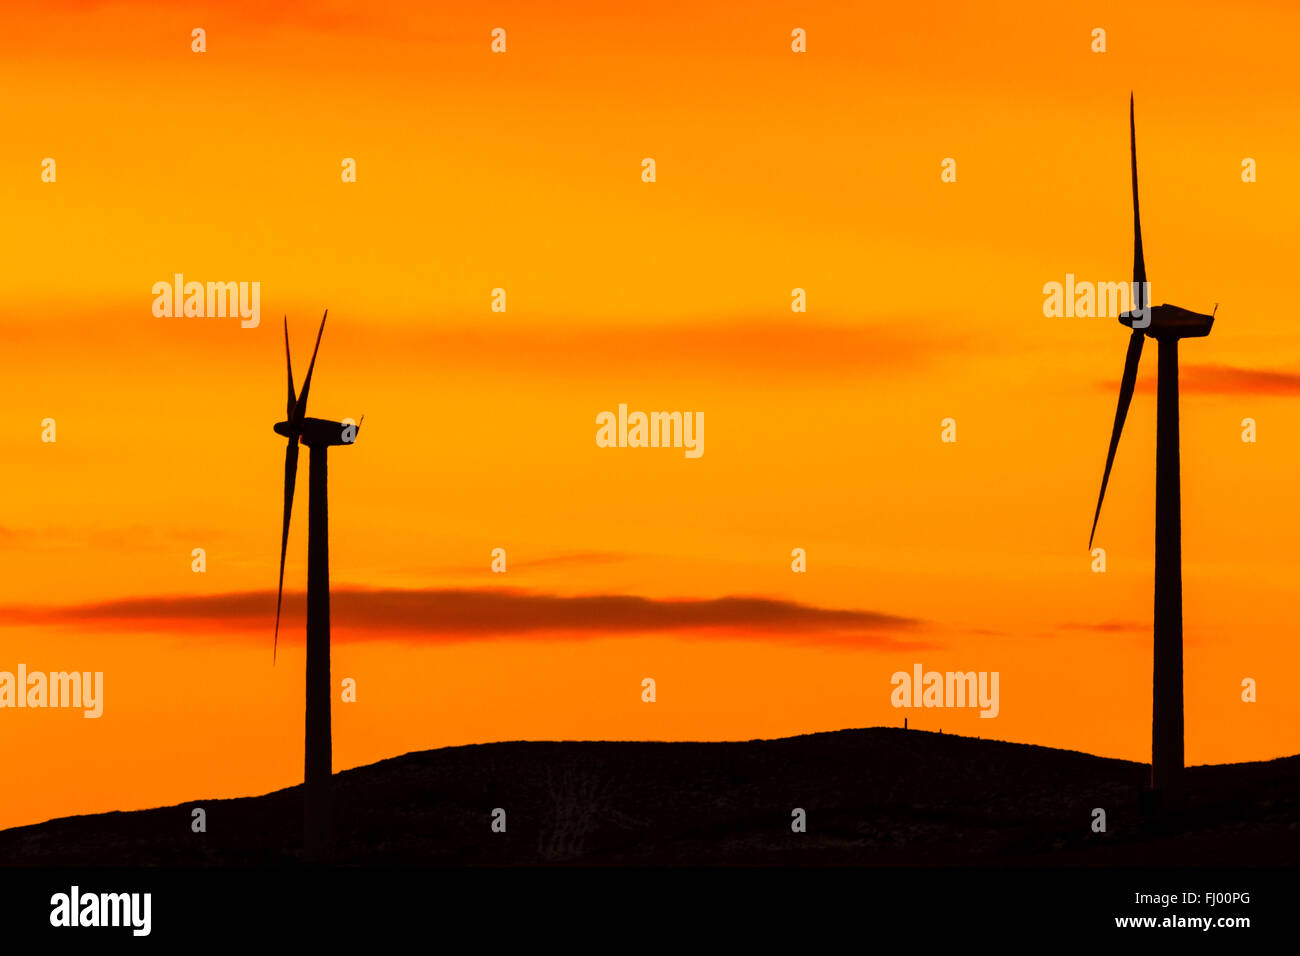 Silueta de dos aerogeneradores contra un cielo naranja Foto de stock